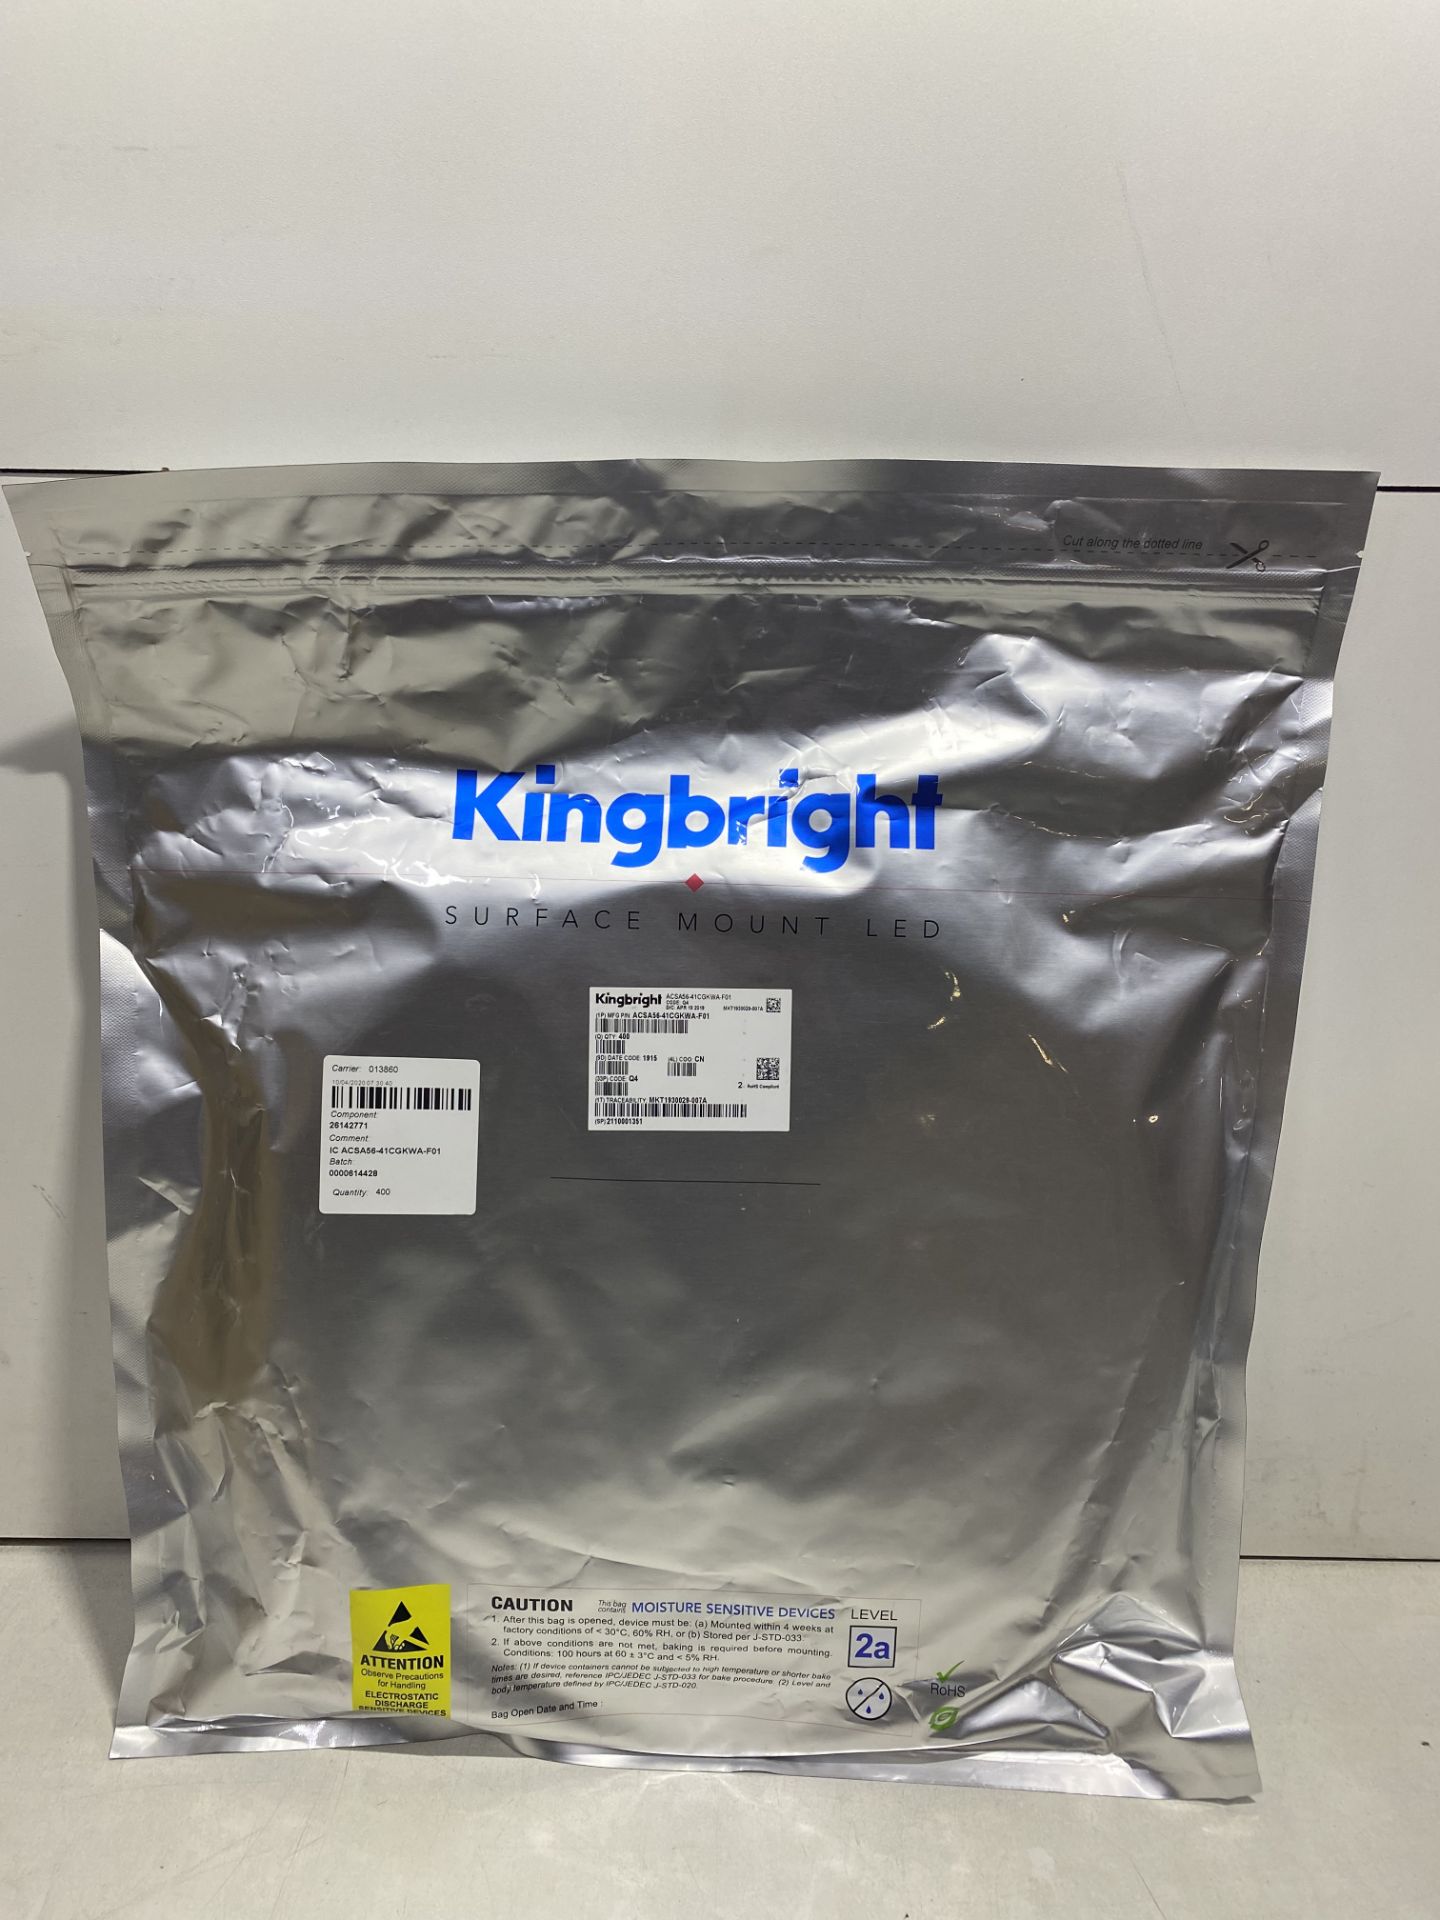 Approximately 4,500 x Kingbright ACSA56-41CGKWA-F01 LED Display Modules - Image 2 of 2